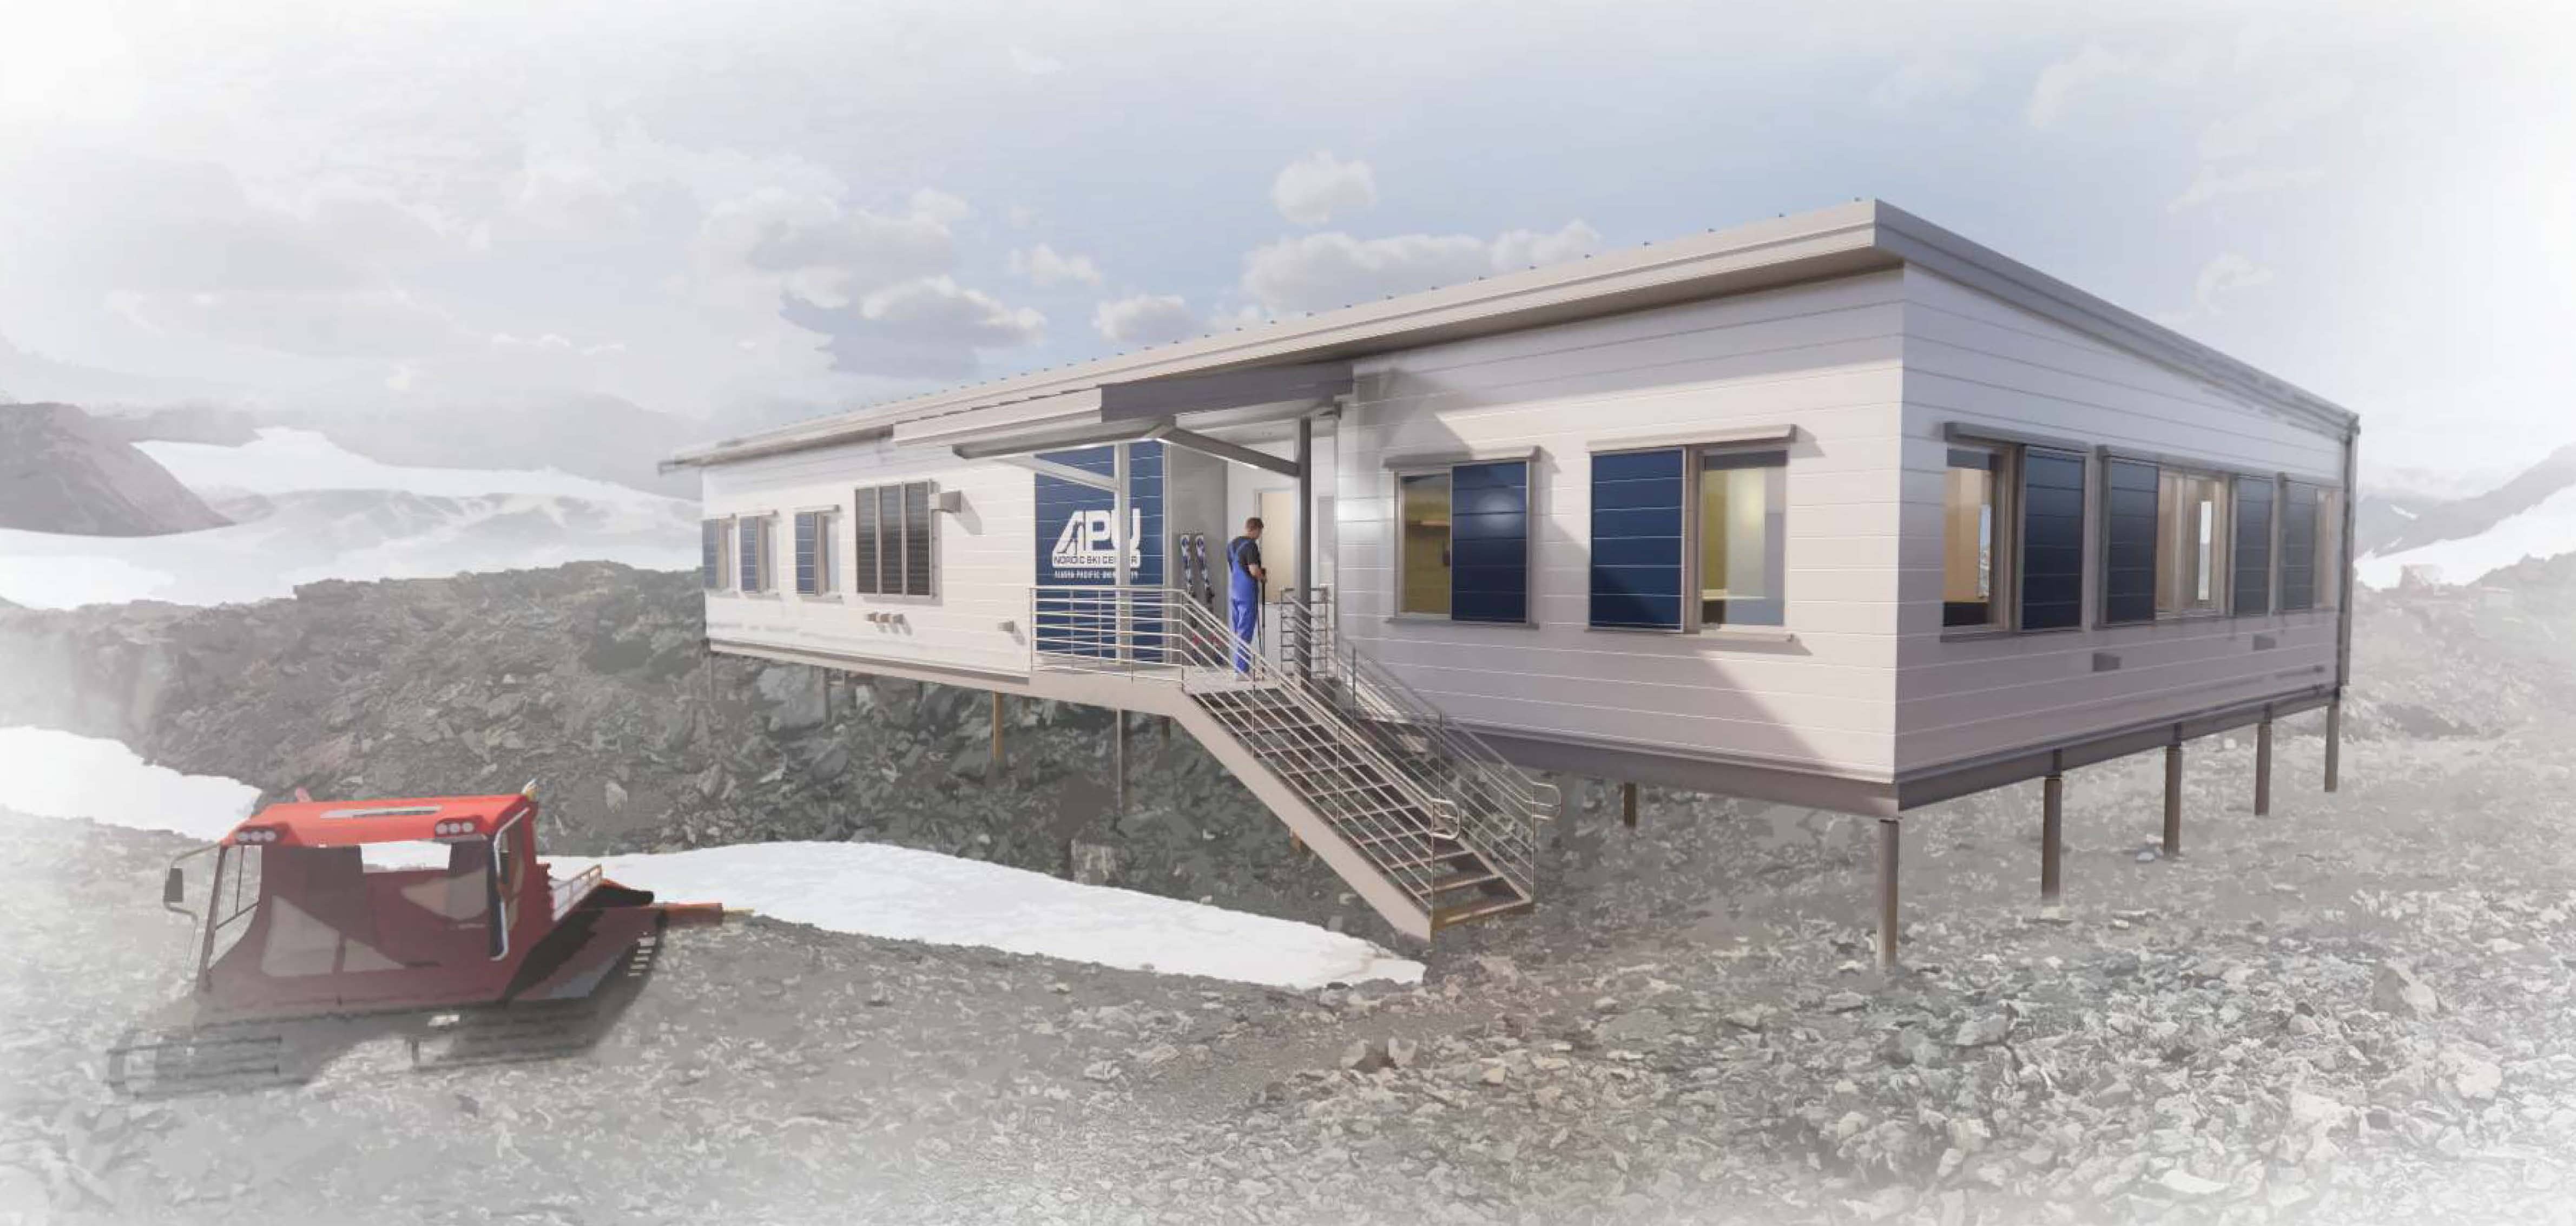 Alaska Pacific University Thomas Nordic Center concept rendering